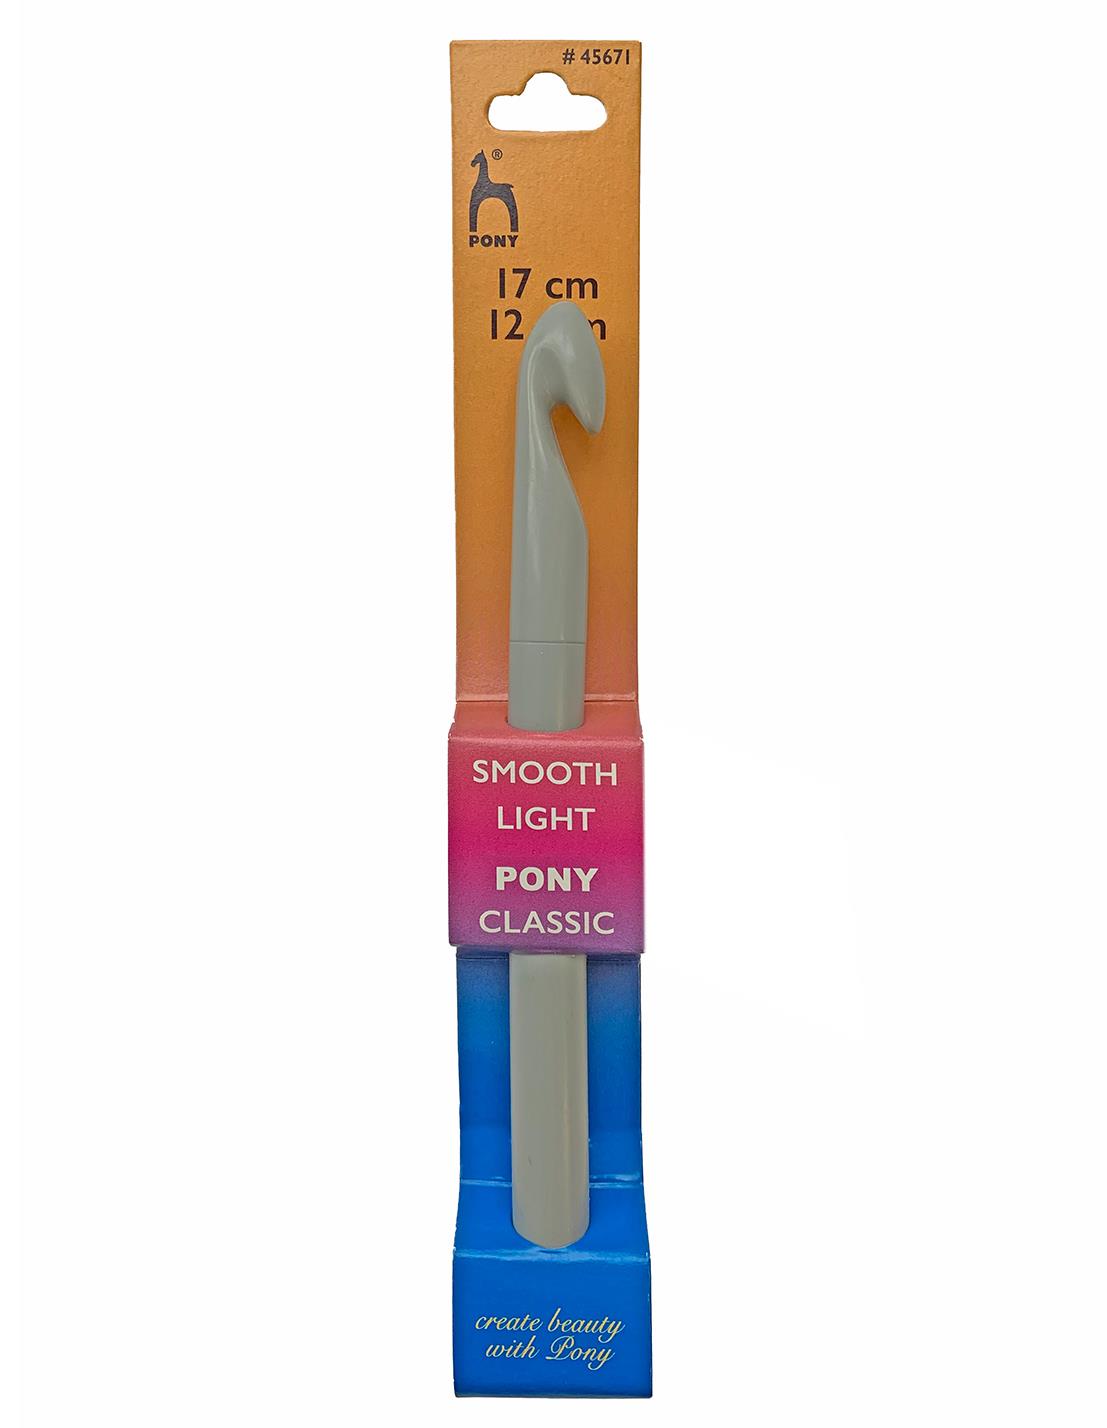 Pony 12mm plastic crochet hook (45671)